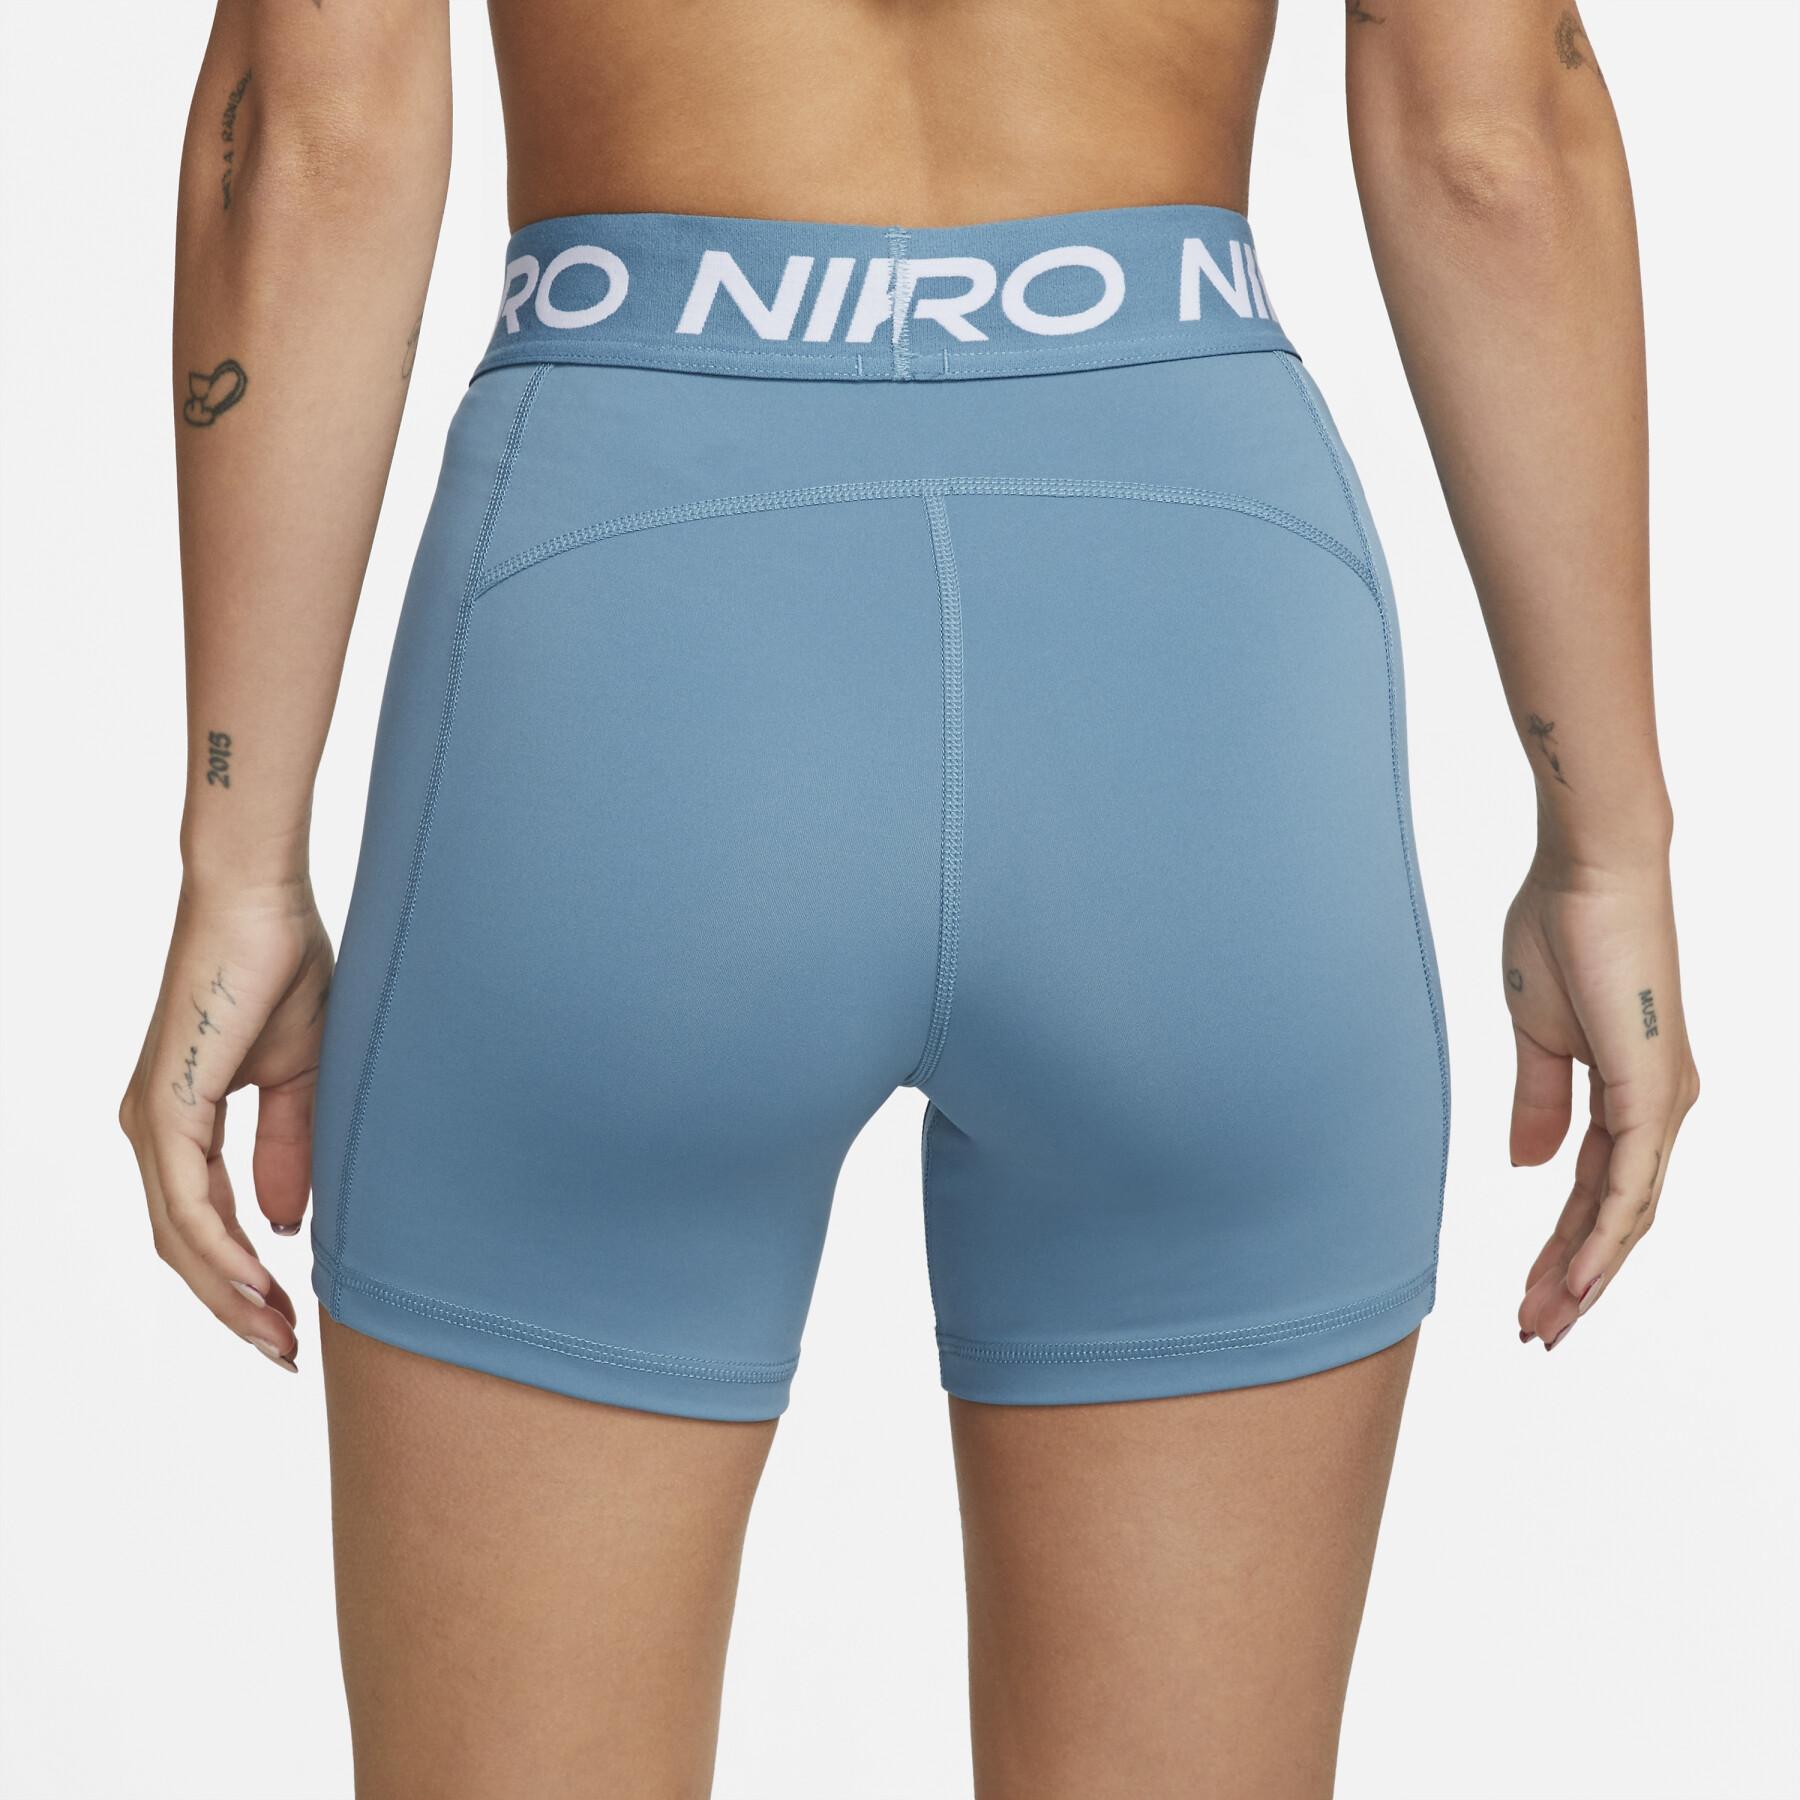 Women's shorts Nike Pro 365